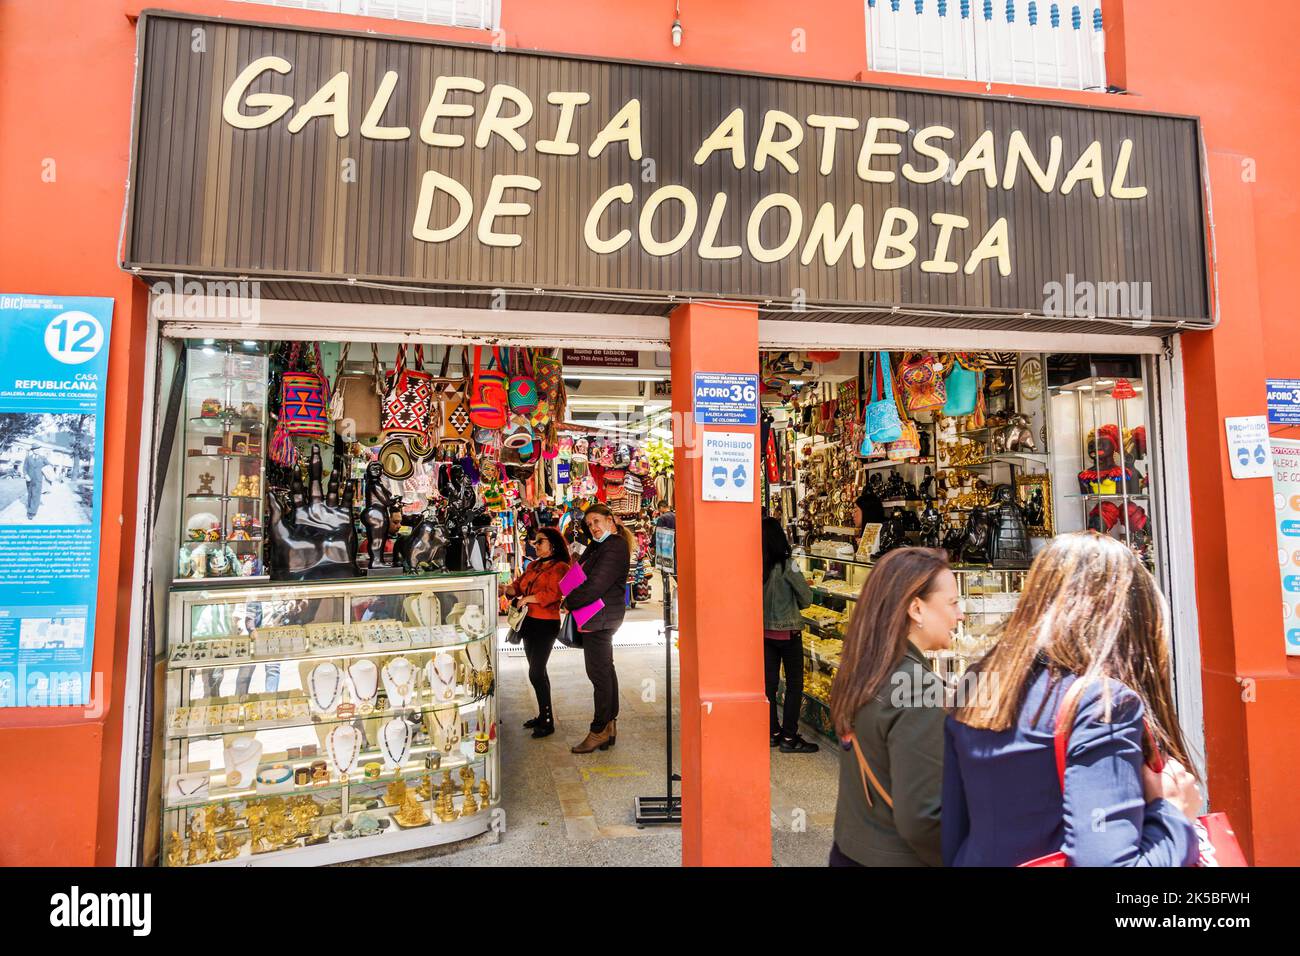 Bogota Colombia,Santa Fe Galeria Artesanal de Colombia,store stores business businesses shop shops market markets marketplace selling buying shopping, Stock Photo